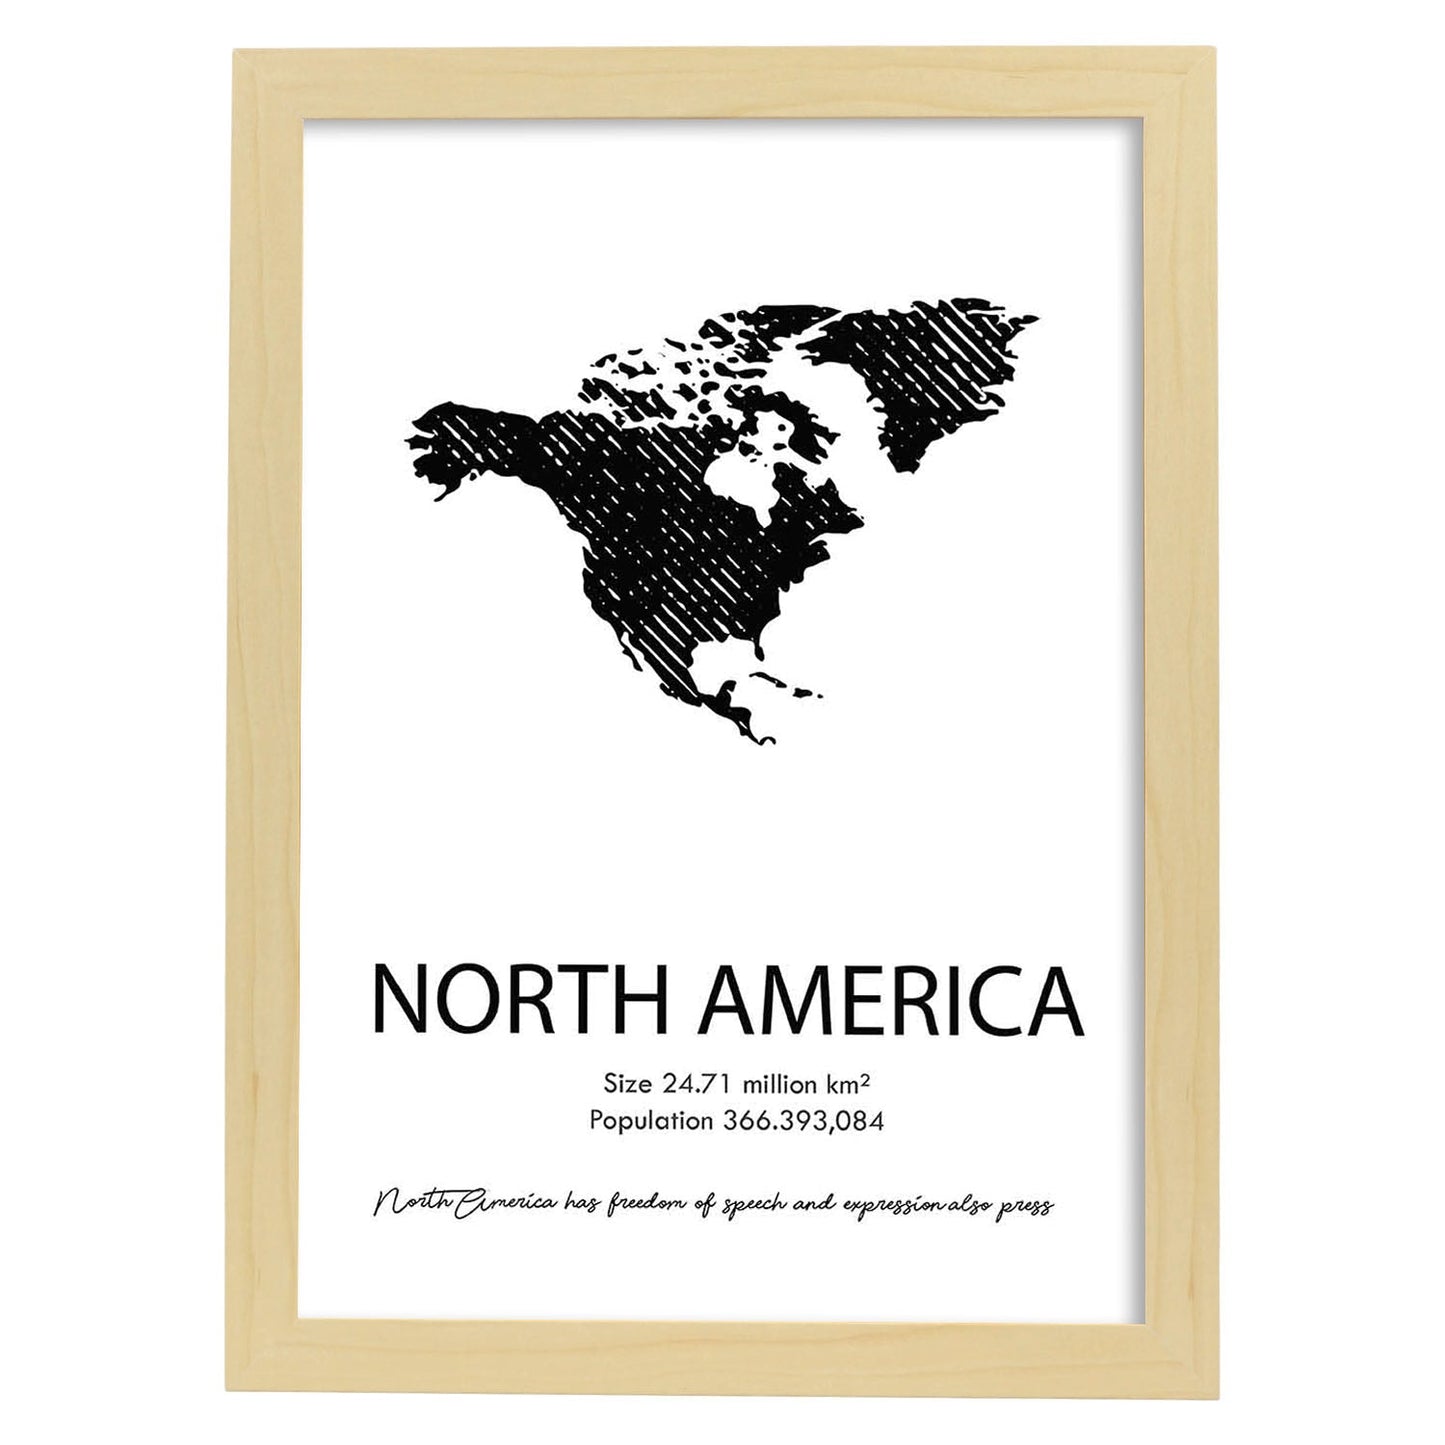 Poster de Norteamérica. Láminas de paises y continentes del mundo.-Artwork-Nacnic-A3-Marco Madera clara-Nacnic Estudio SL